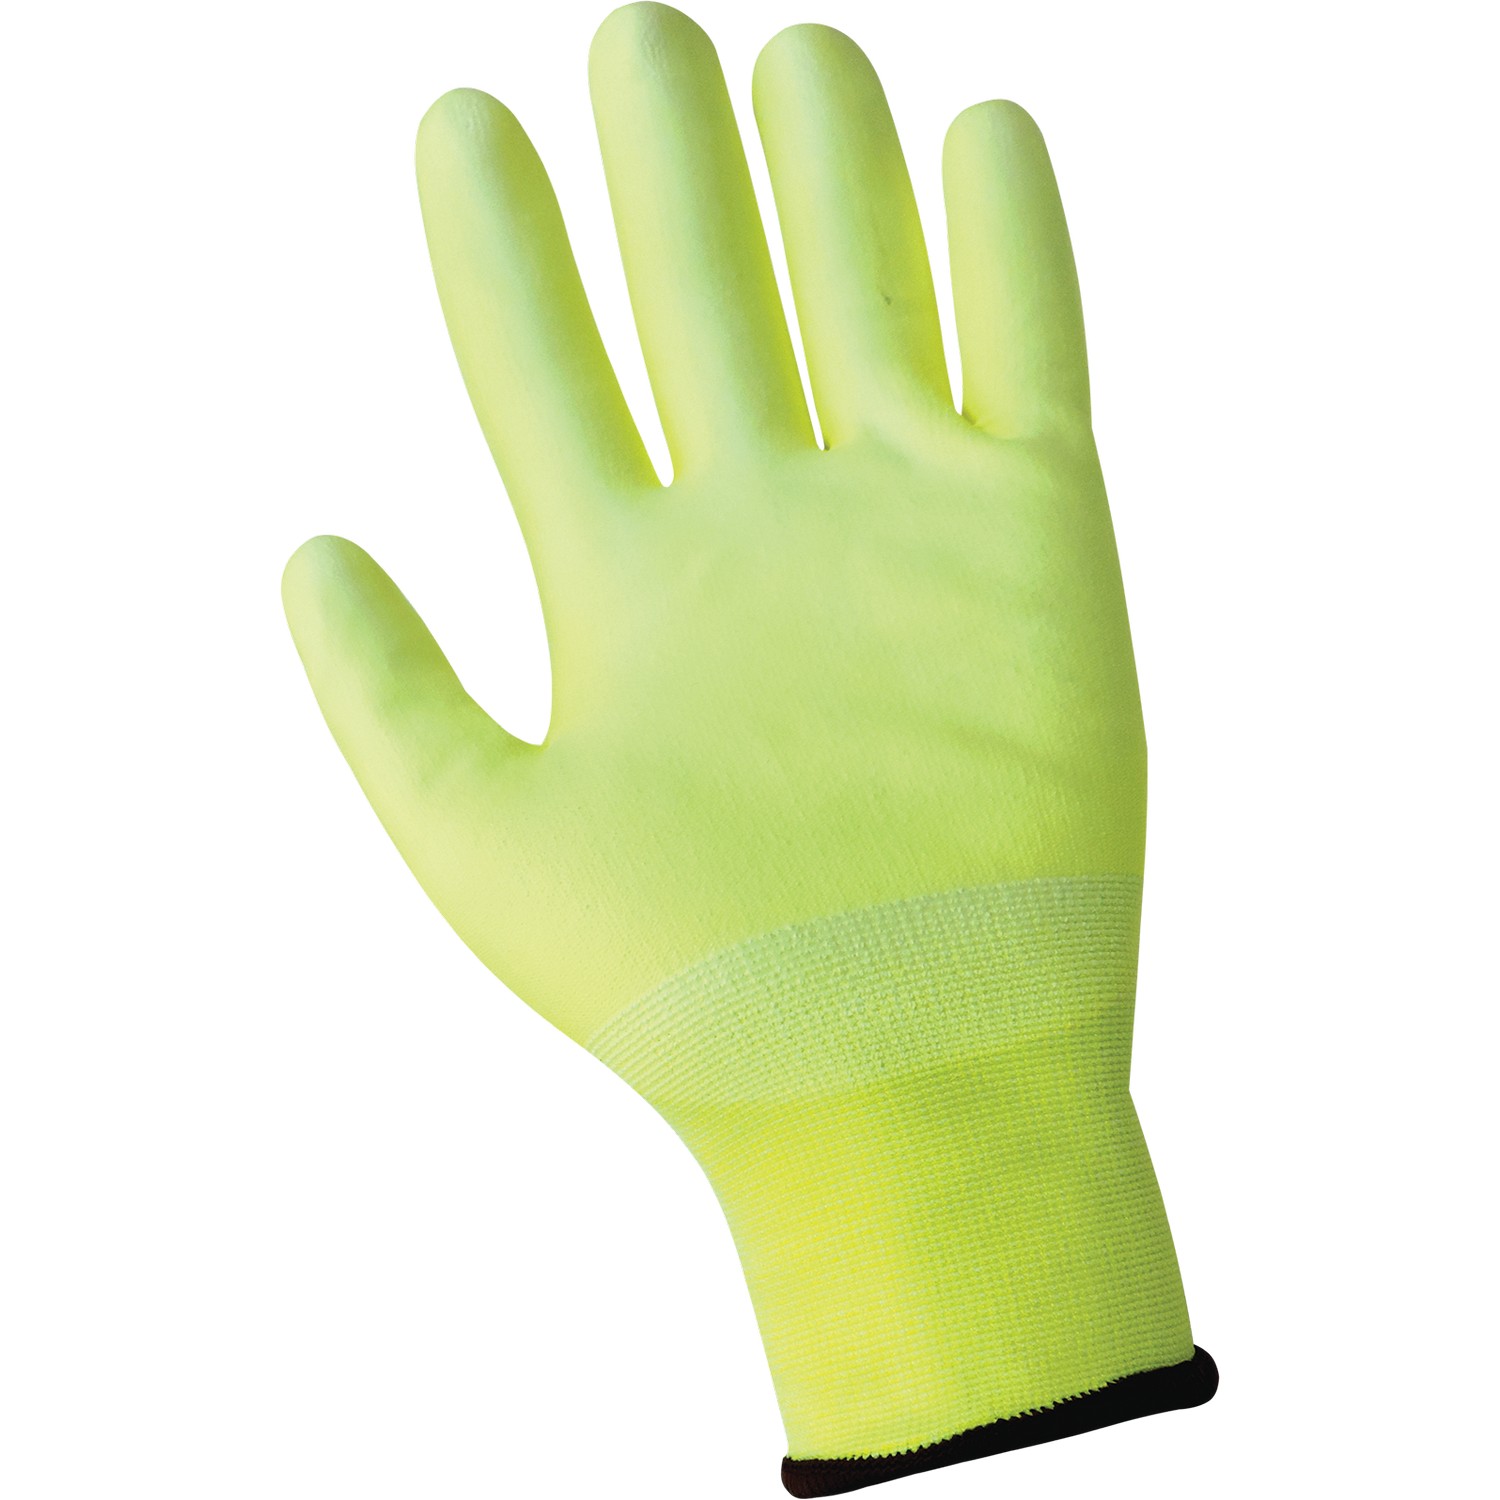 Global Glove CR18NFT - Samurai Glove High-Visibility Coated Gloves, Cut Resistant Glove, A2